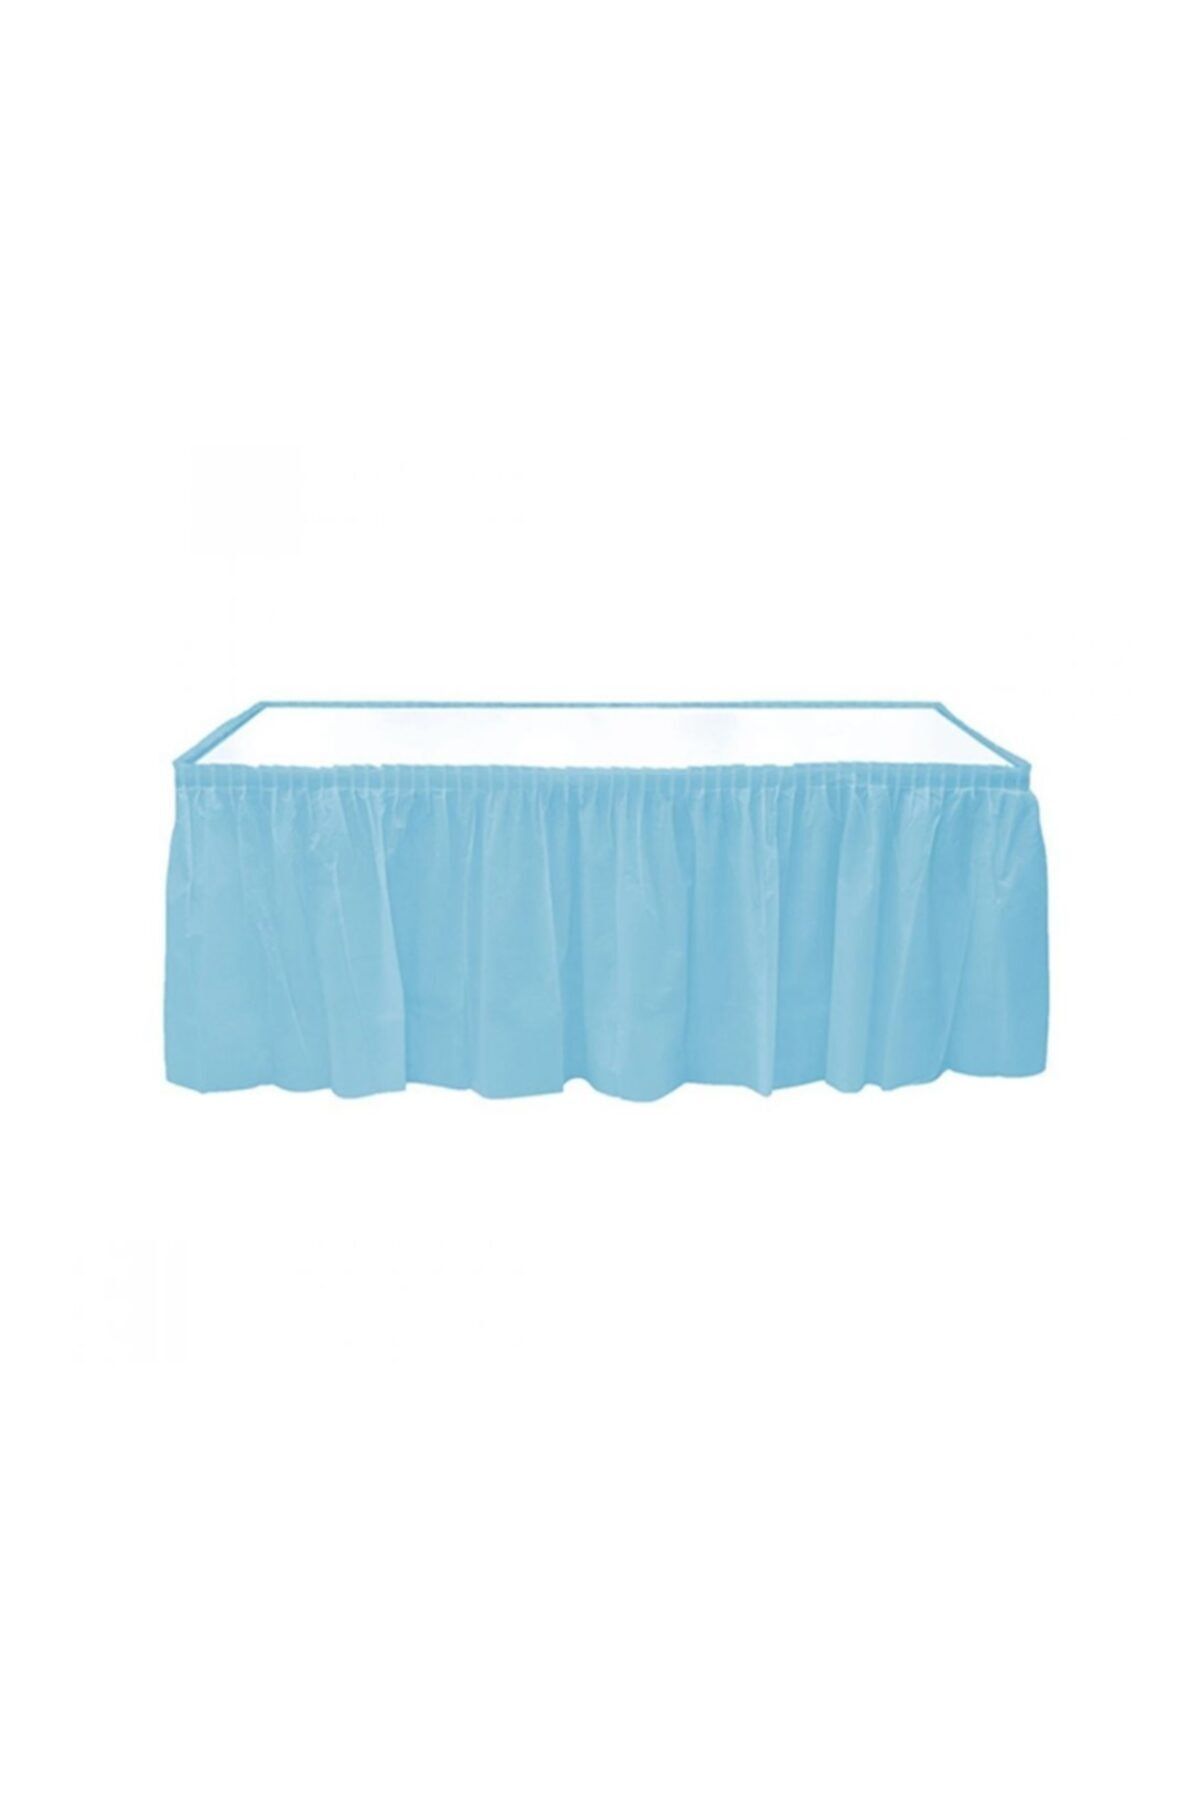 Roll Up Açık Mavi Plastik Masa Eteği 75 X 4,26 cm